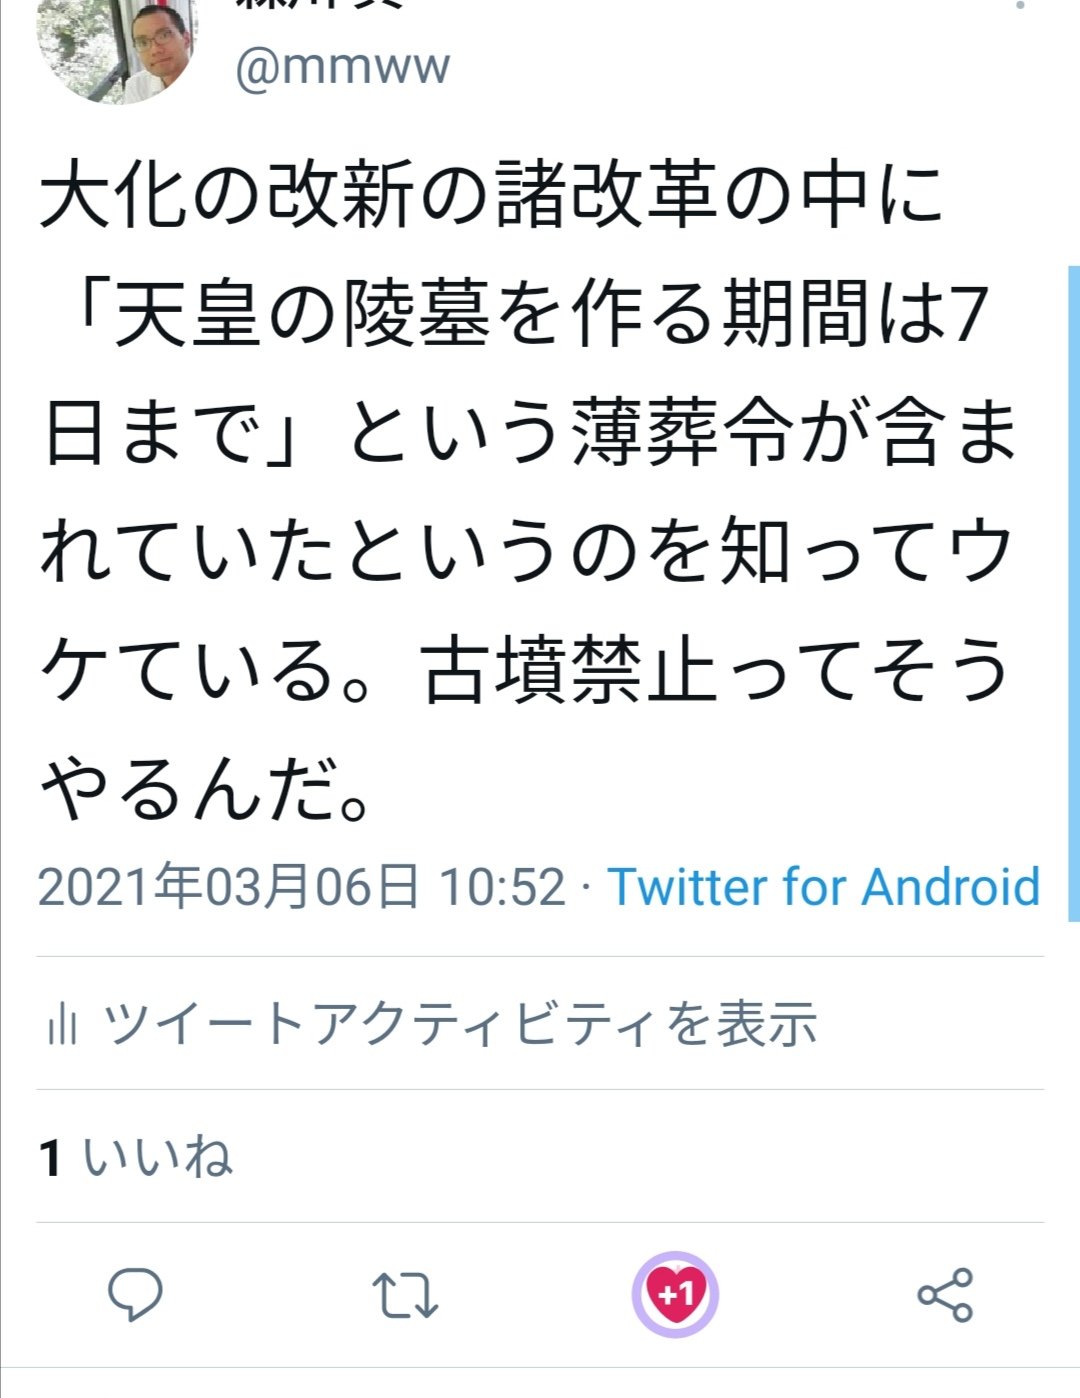 Keiichiro Shikano L Rt Mmww いいねに 1 という謎エフェクトが追加されてるな スーパー ふぁぼで 10とかが実装される伏線か T Co 1apjve6j9k Twitter